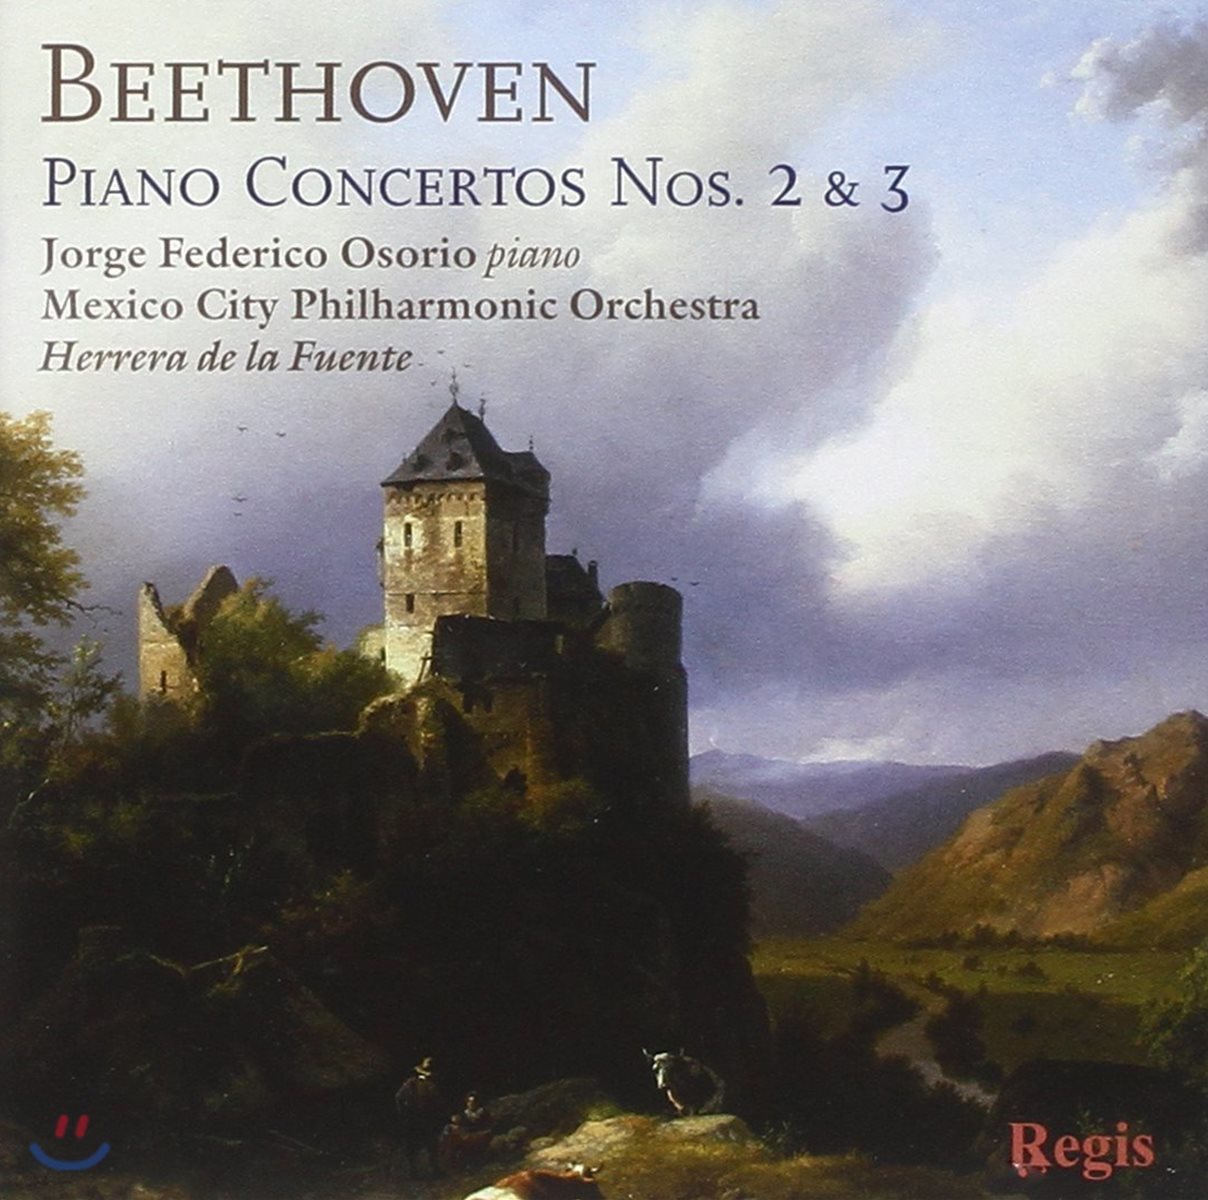 Jorge Federico Osorio 베토벤: 피아노 협주곡 2번, 3번 - 호르헤 페데리코 오소리오, 멕시코 시티 필하모닉, 헤레라 데 라 푸엔테 (Beethoven: Piano Concertos Op.19 &amp; Op.37)